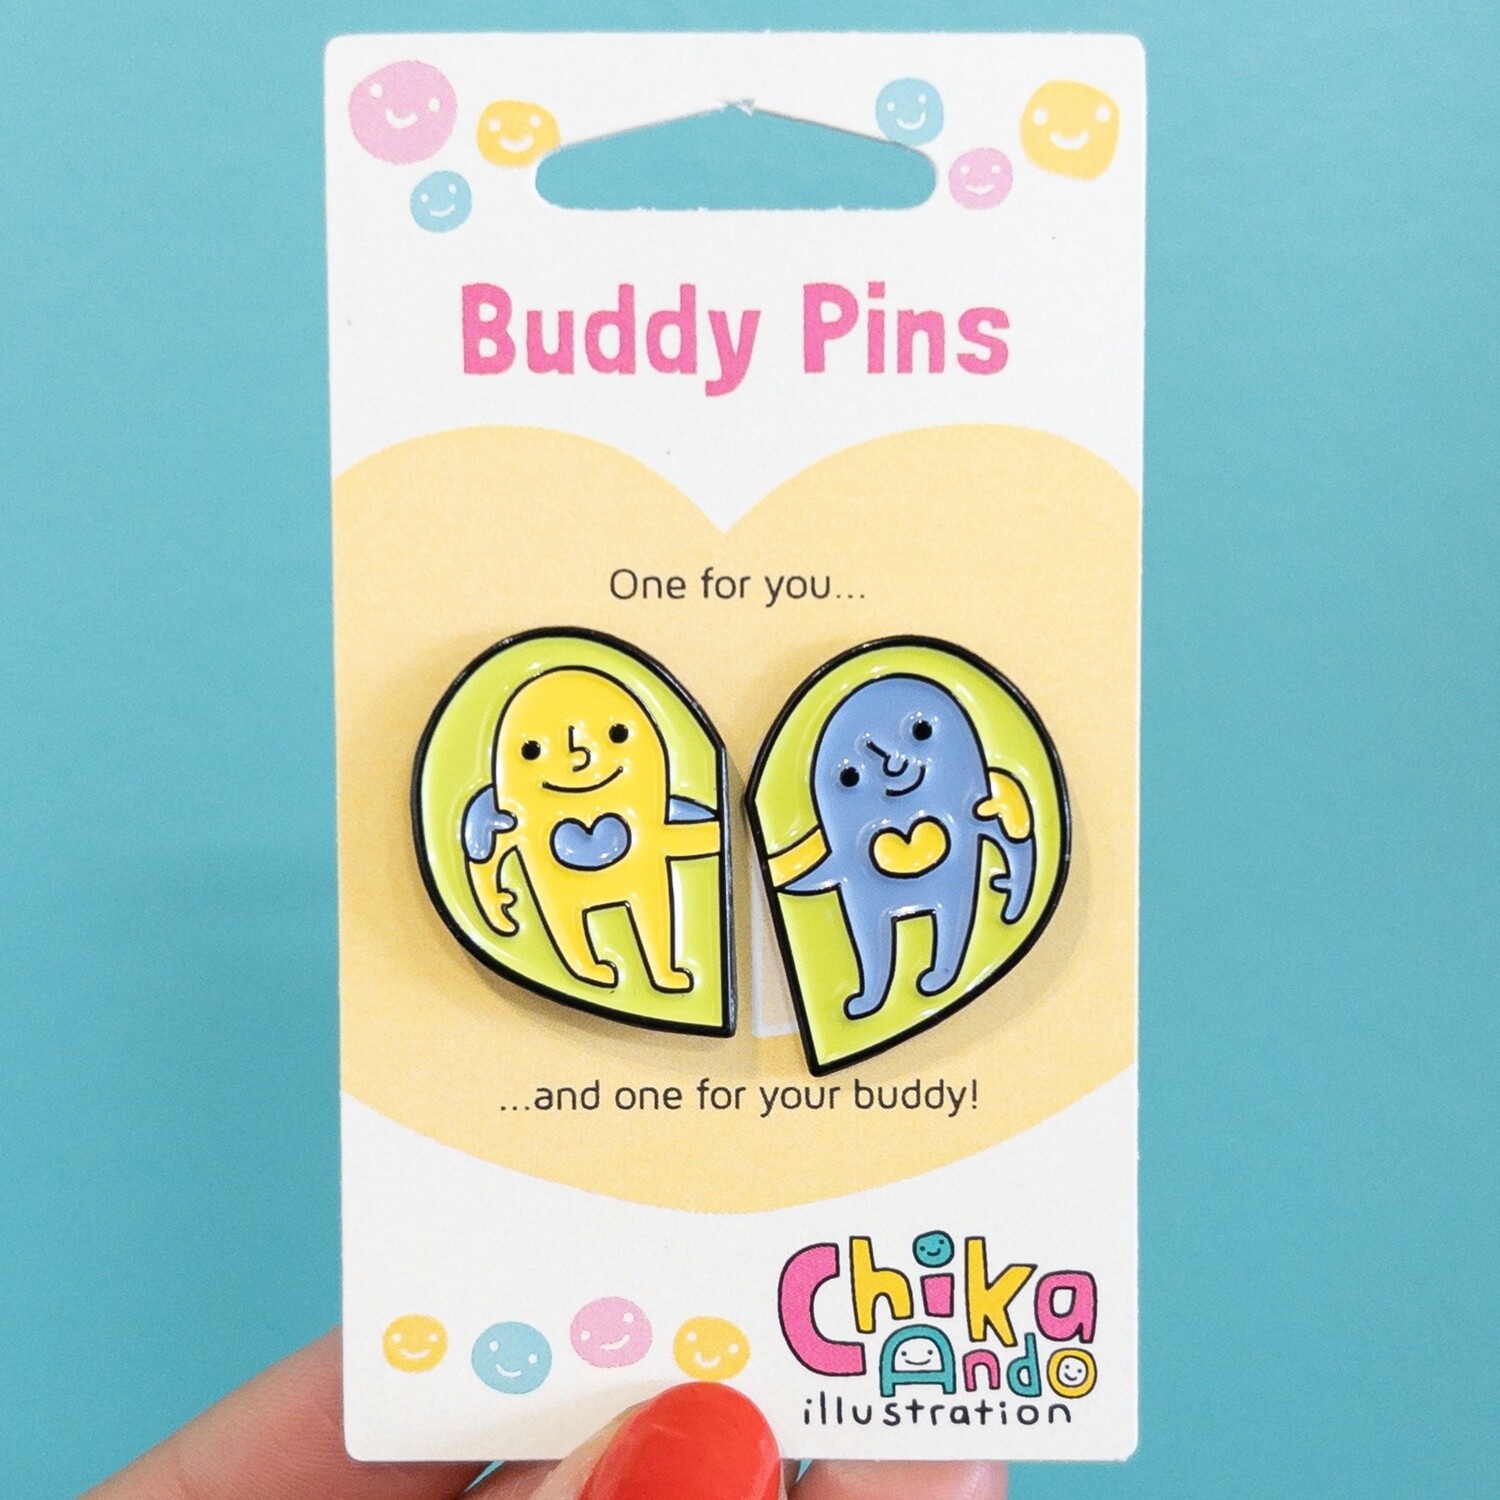 Buddy Pins